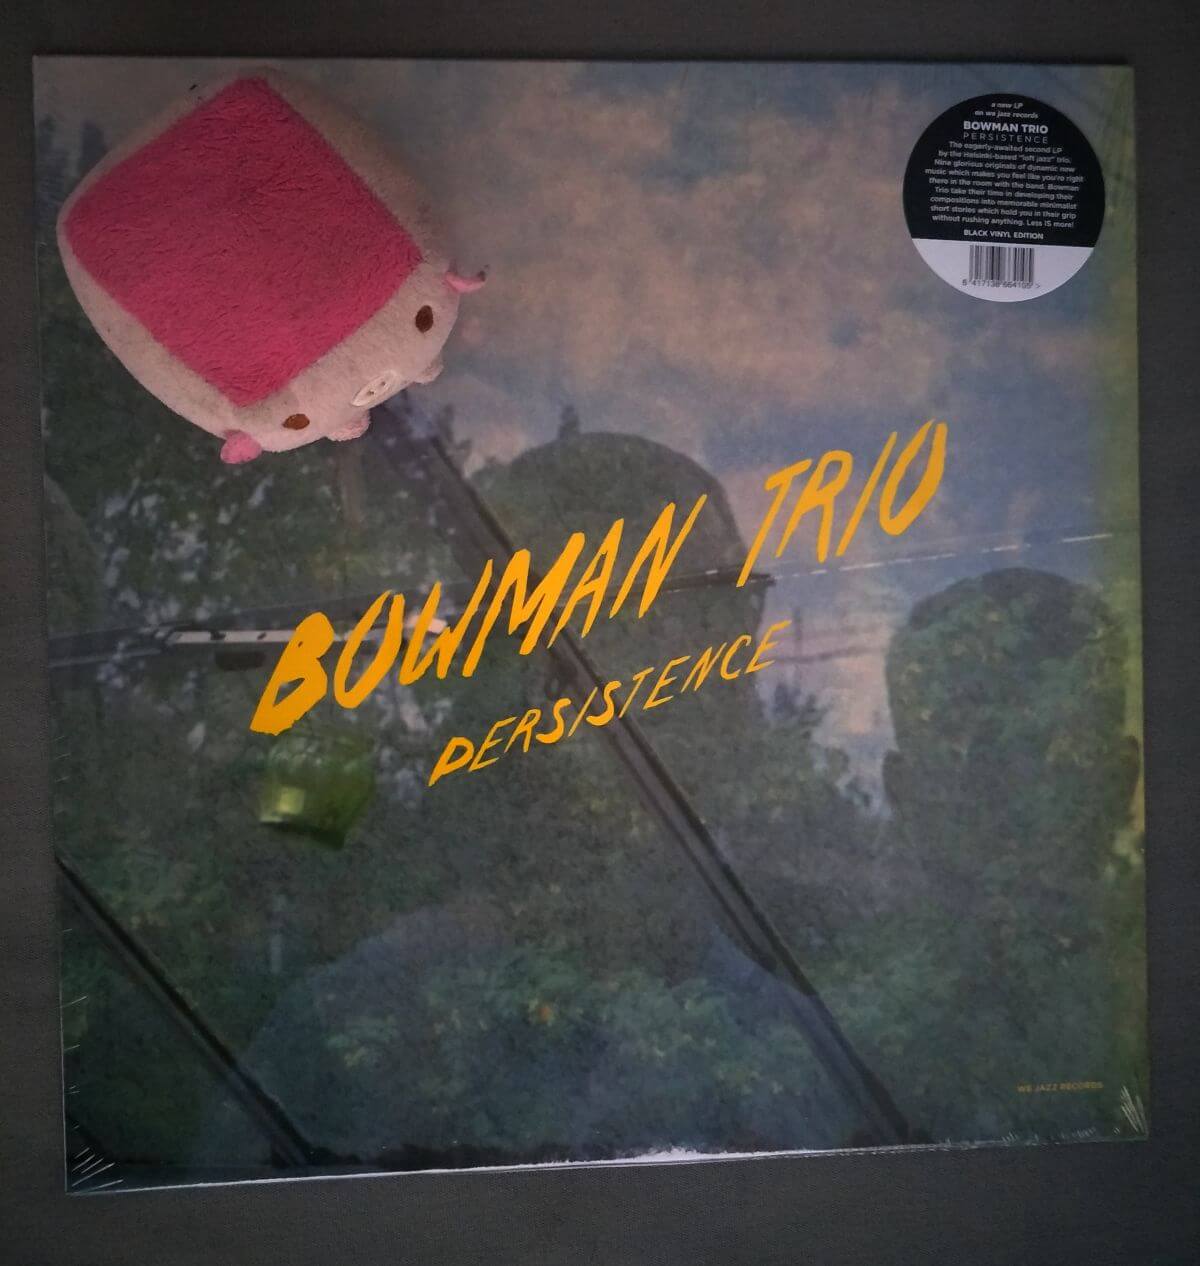 Bowman Trio – Persistence